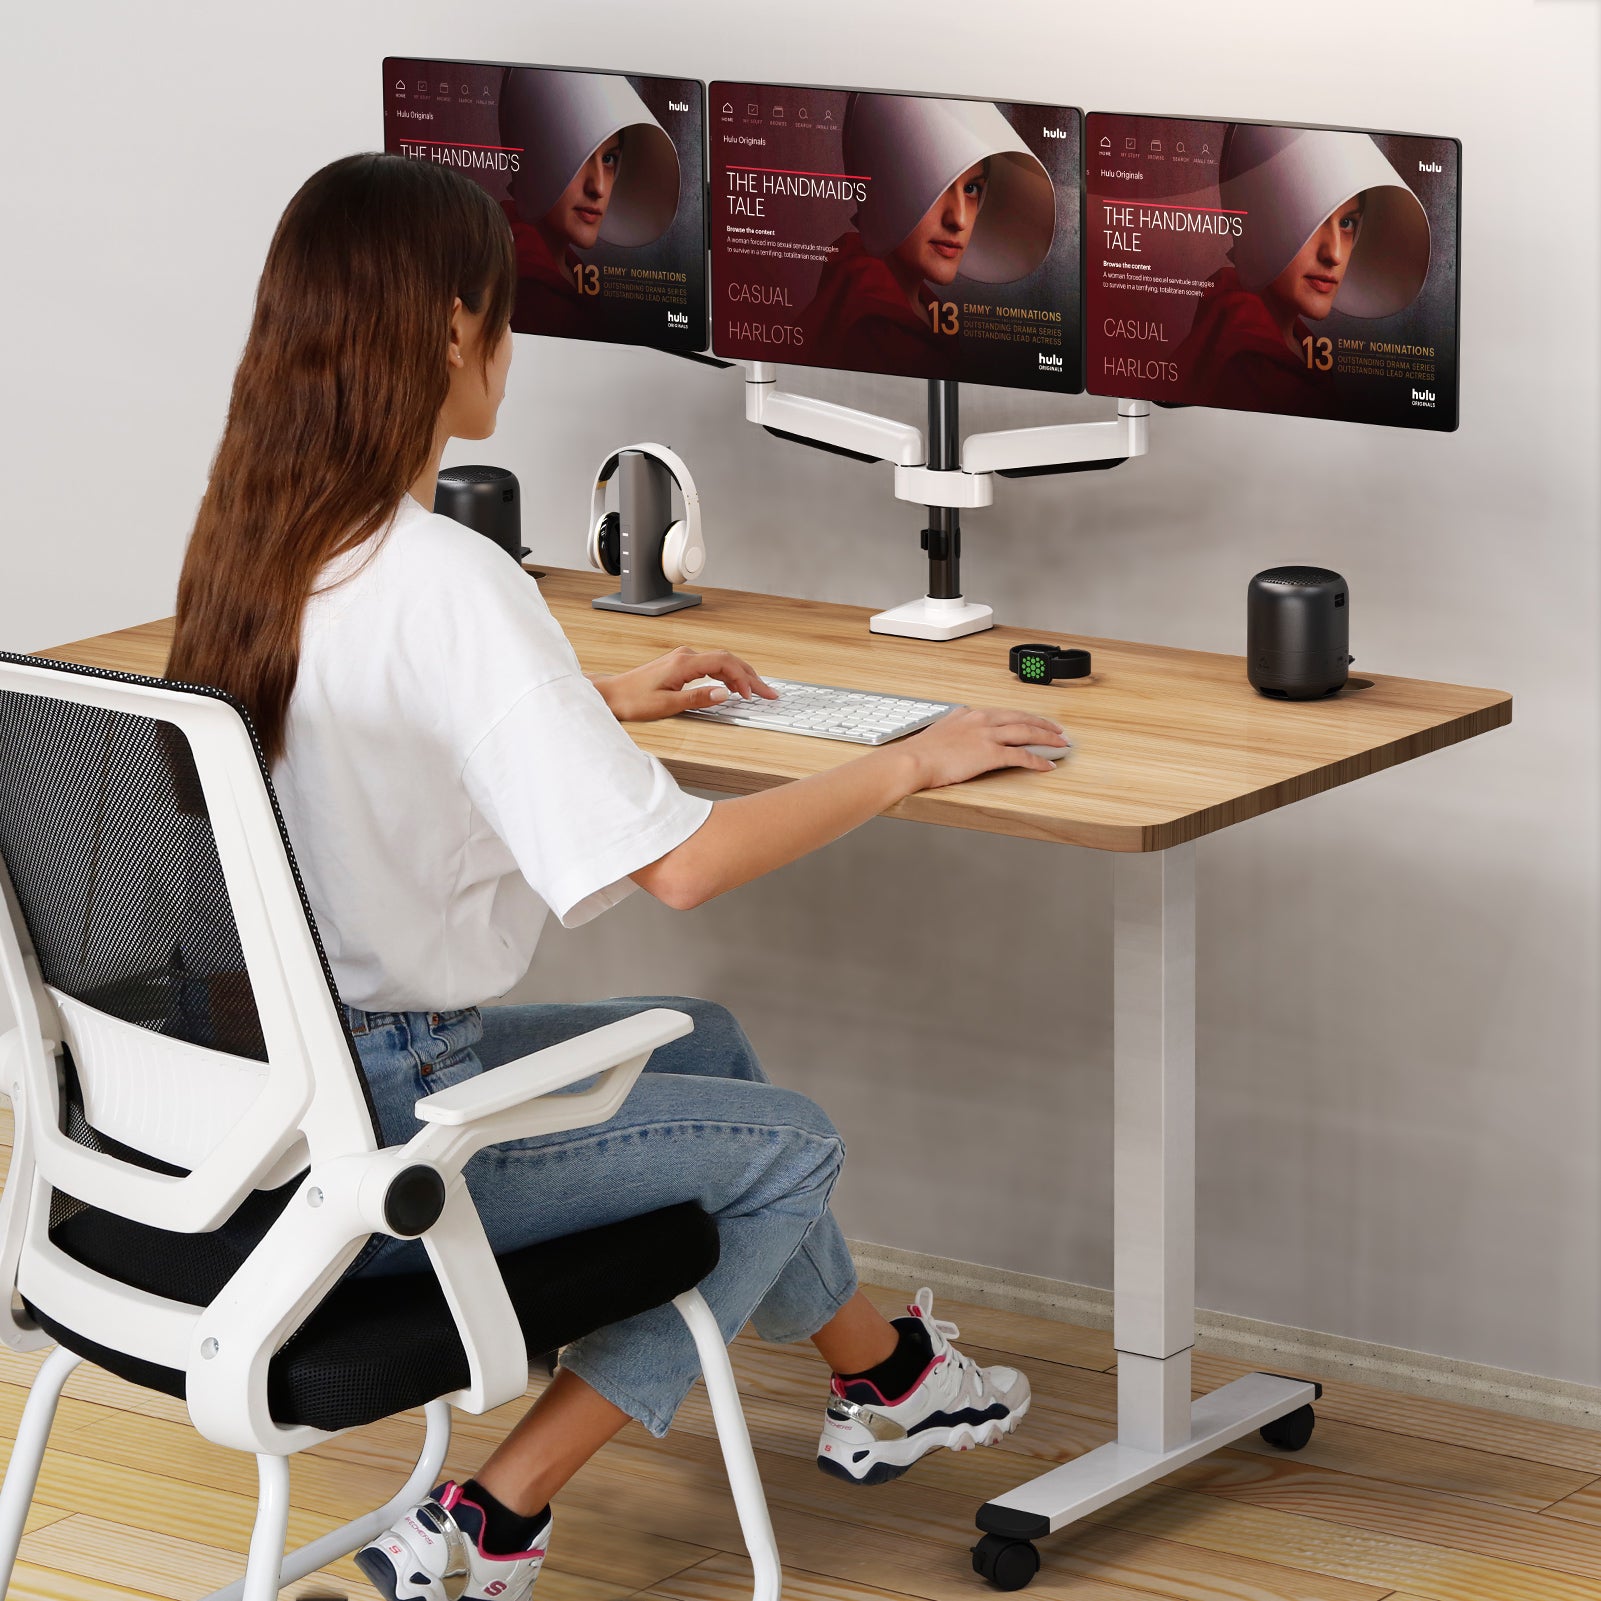 Full Motion Triple Monitor Desk Mount for Max 32'' Monitors MUM-8003A